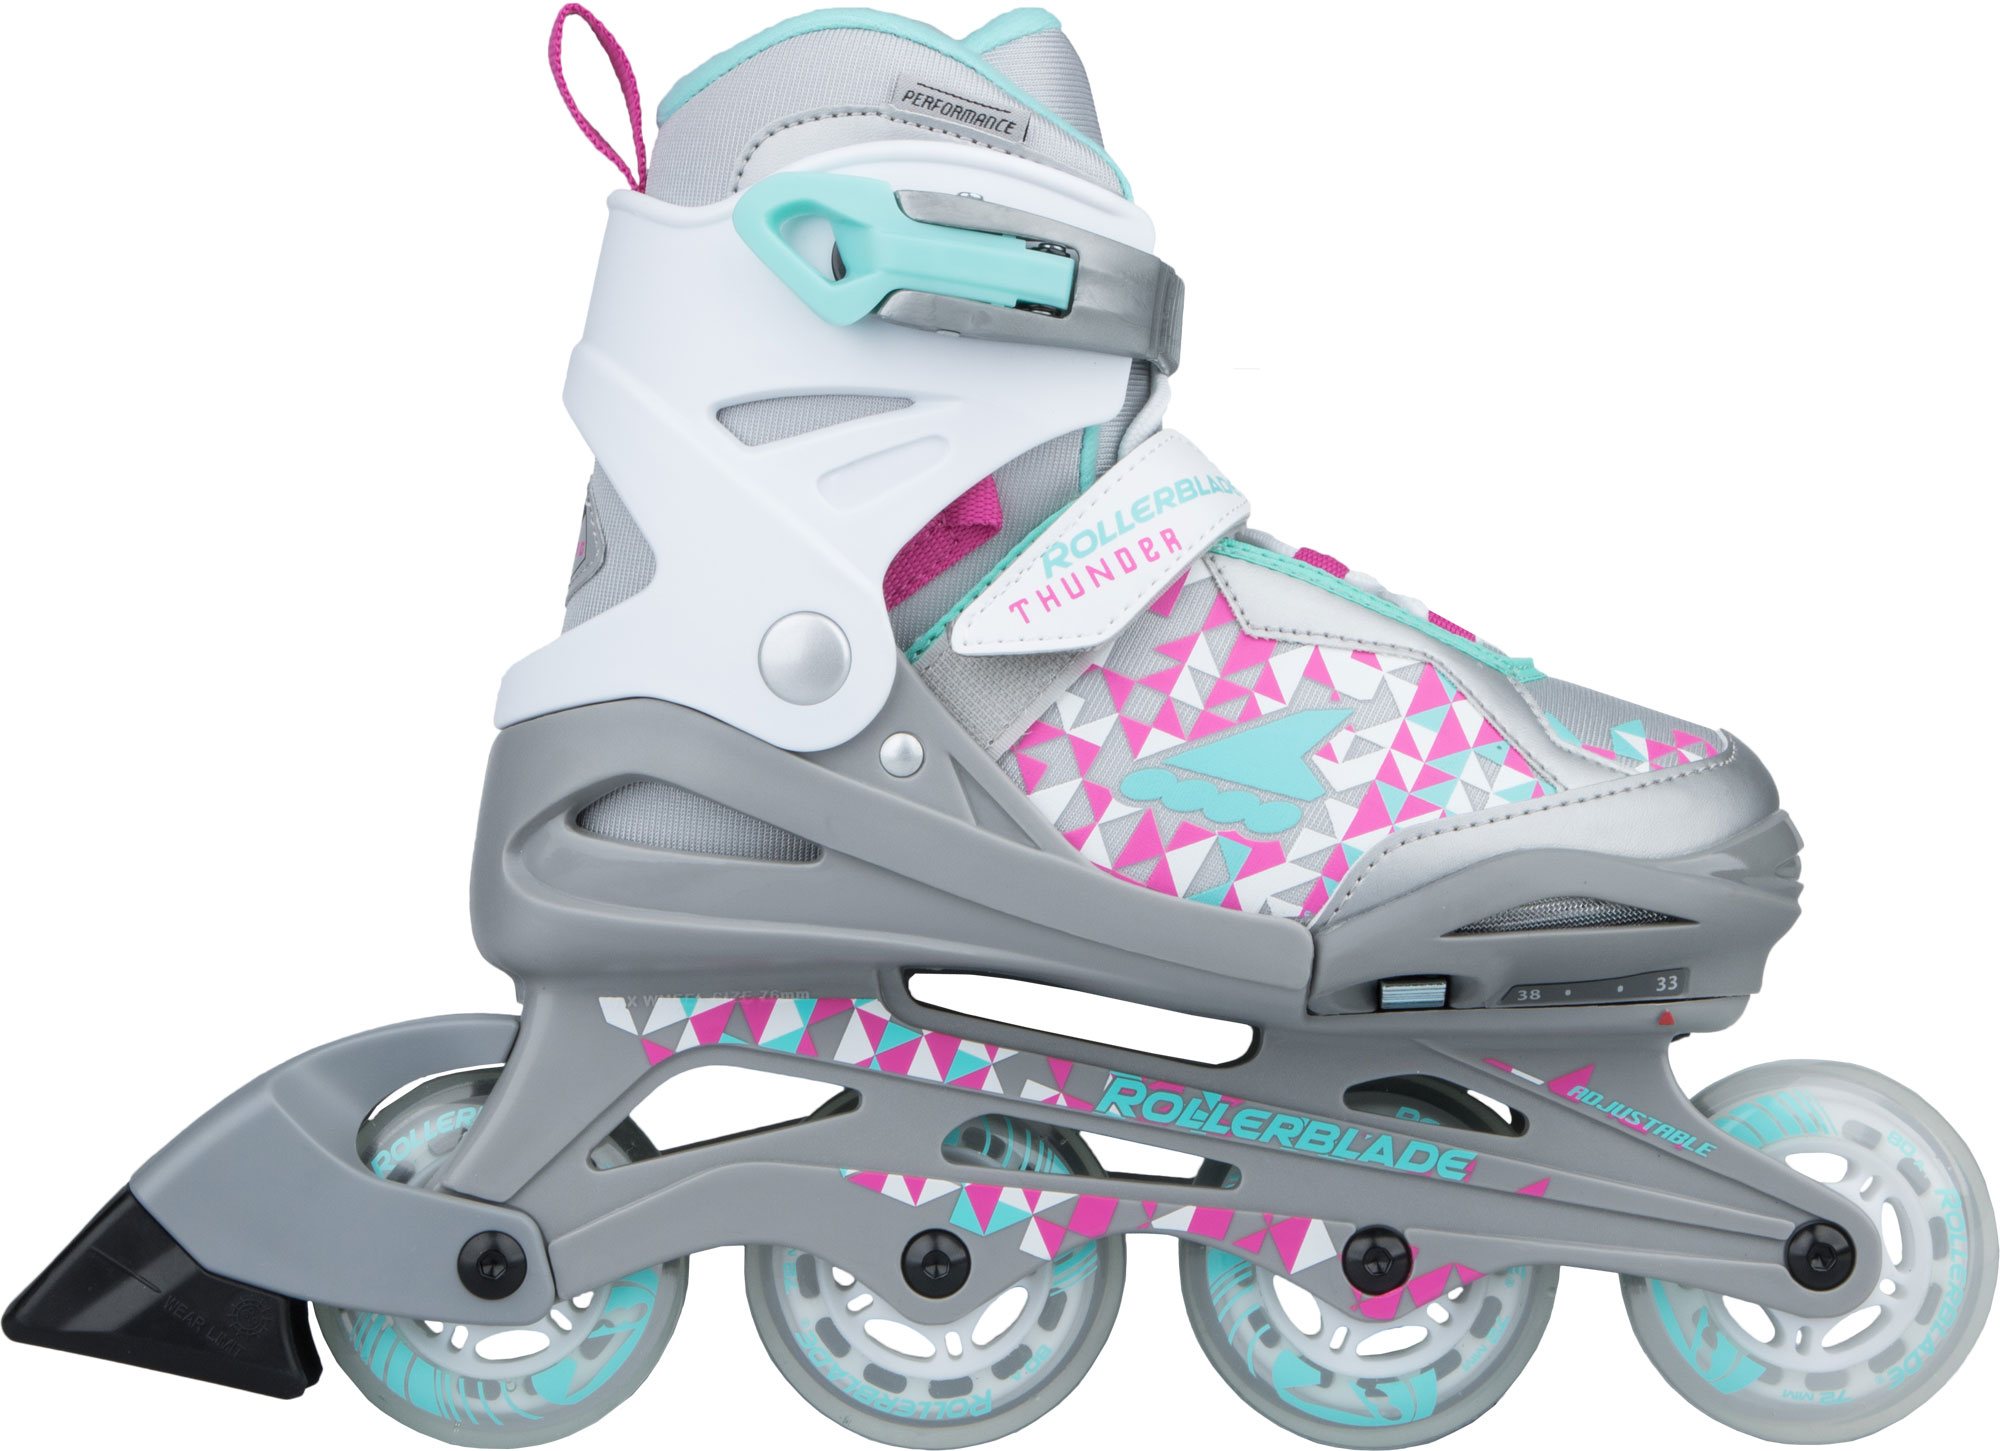 Kids' inline skates